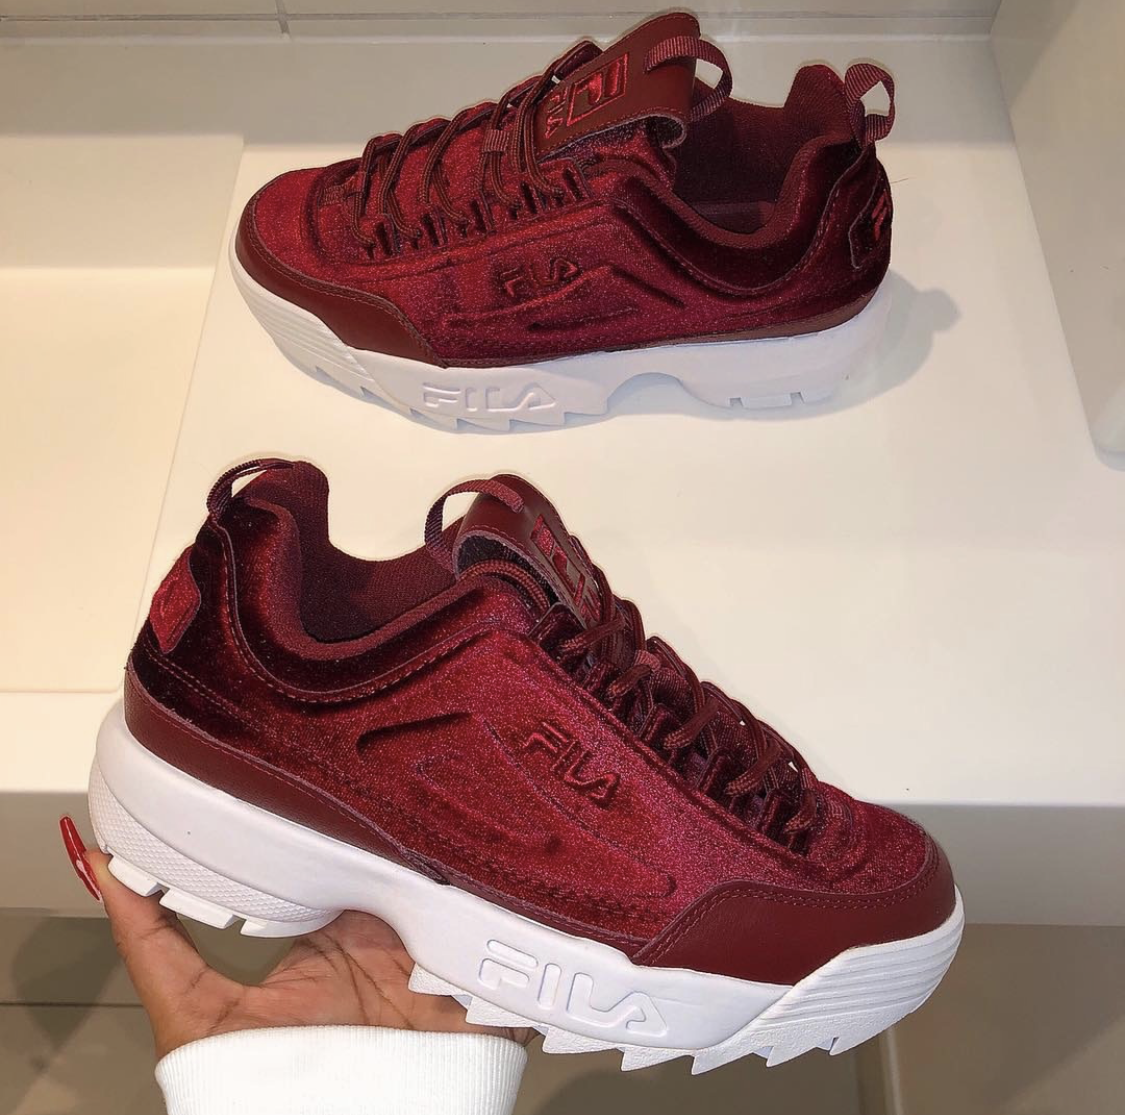 burgundy fila sneakers